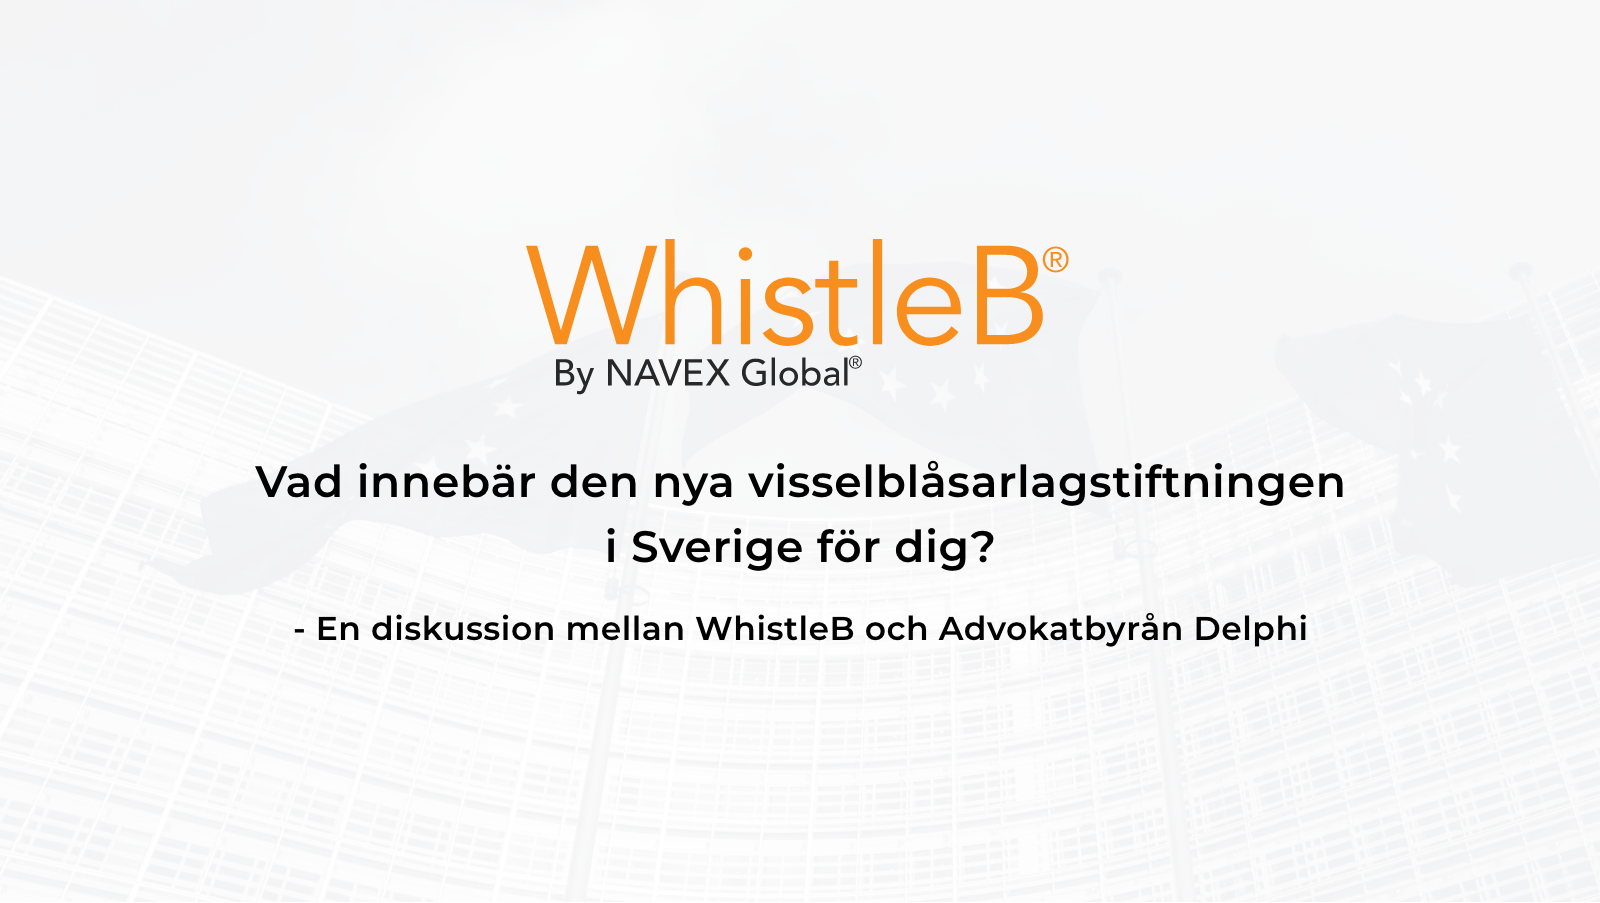 Swedish Whistleblower Protection law